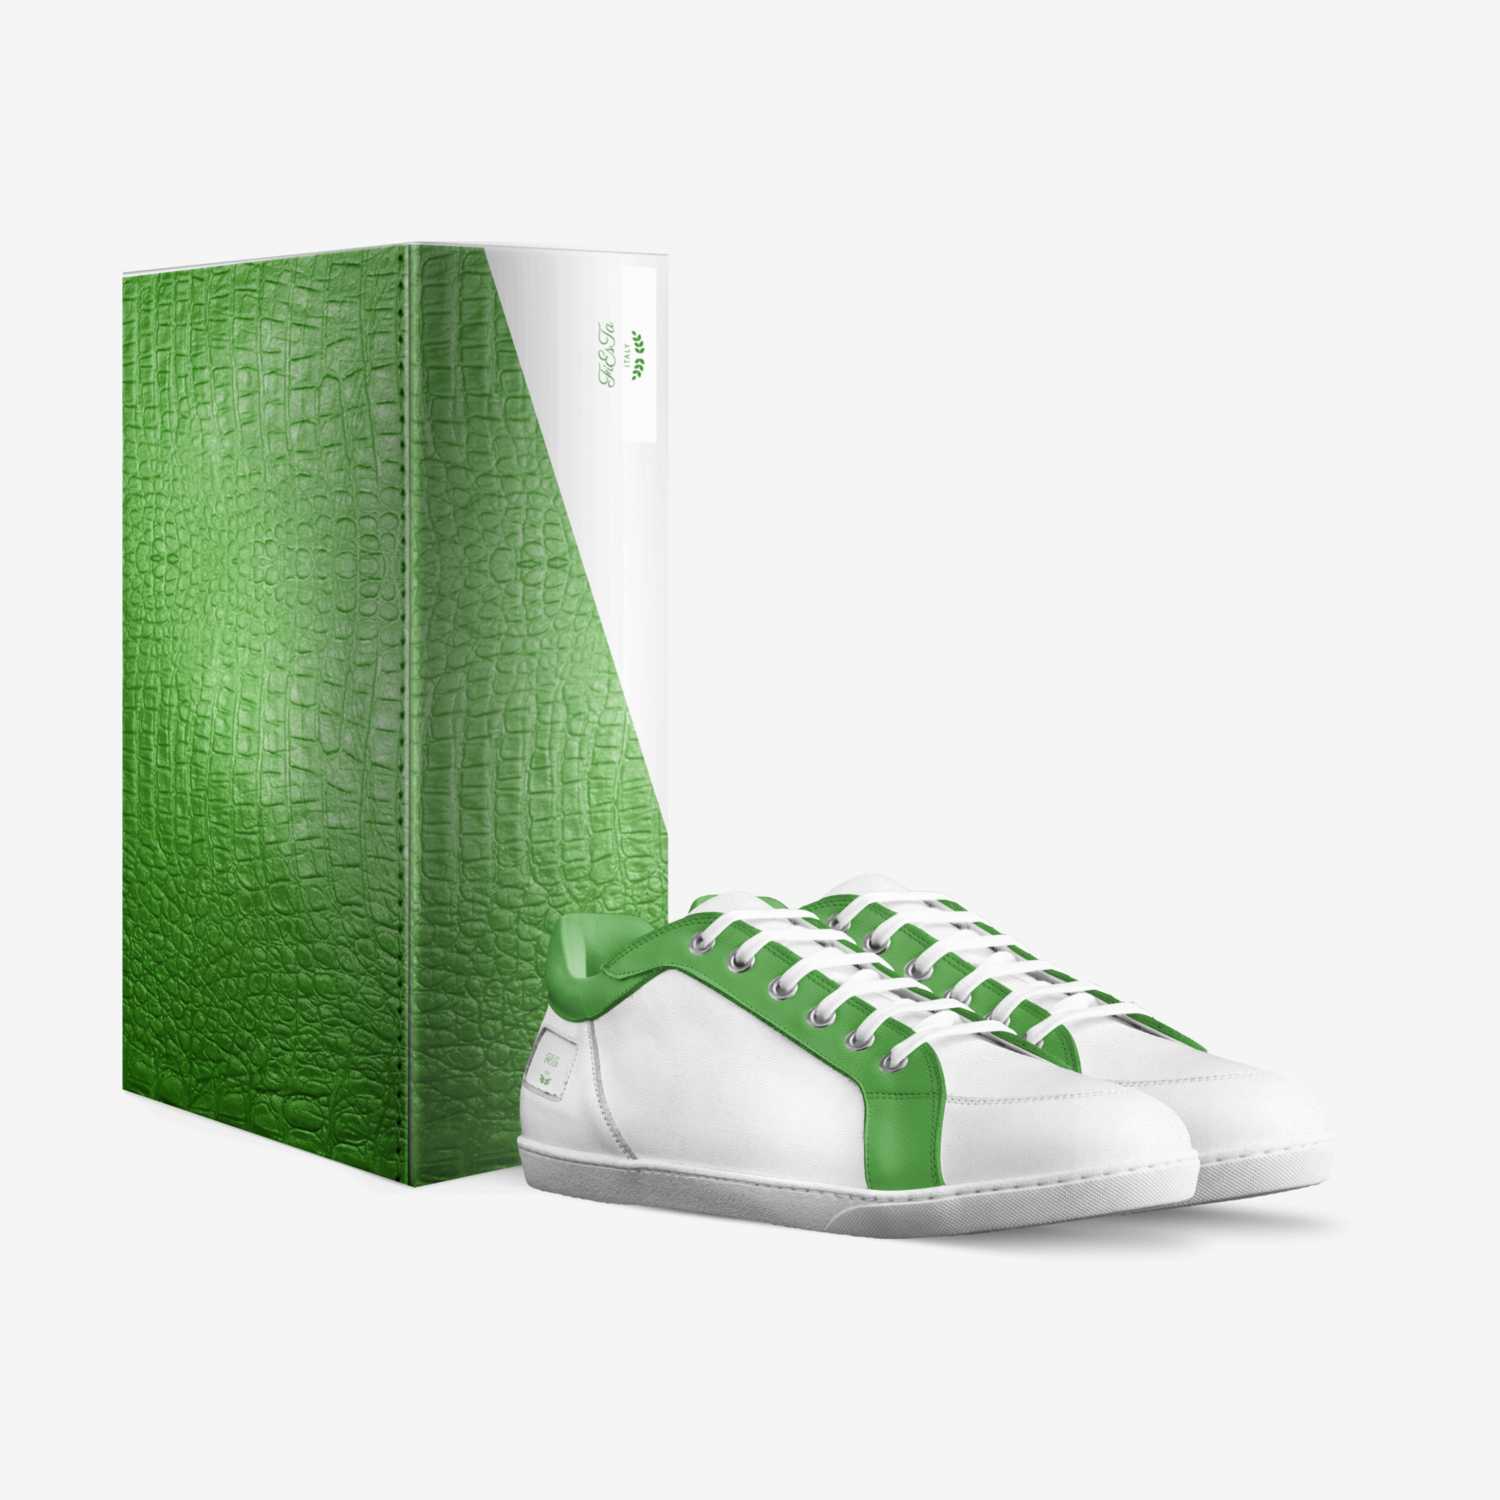 FiEsTa custom made in Italy shoes by Lucas Tikkanen | Box view